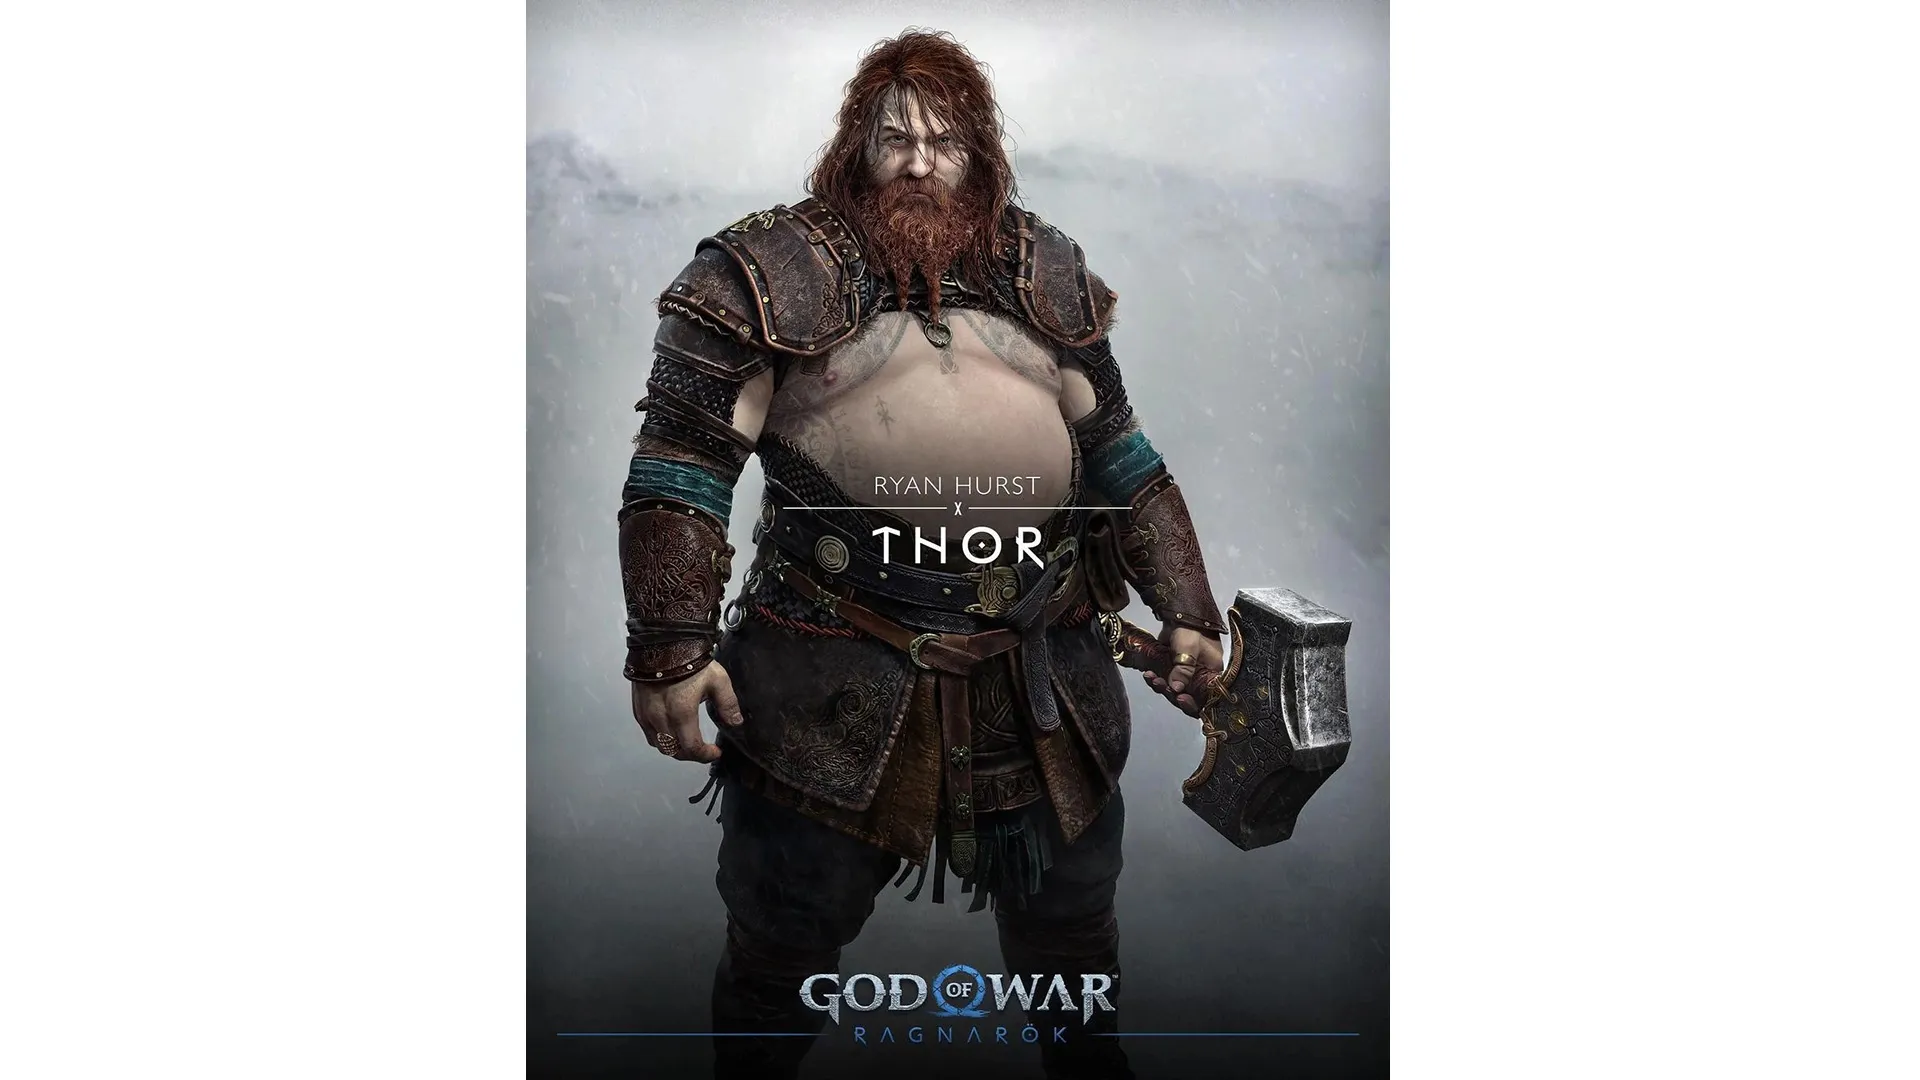 god of war voice actor